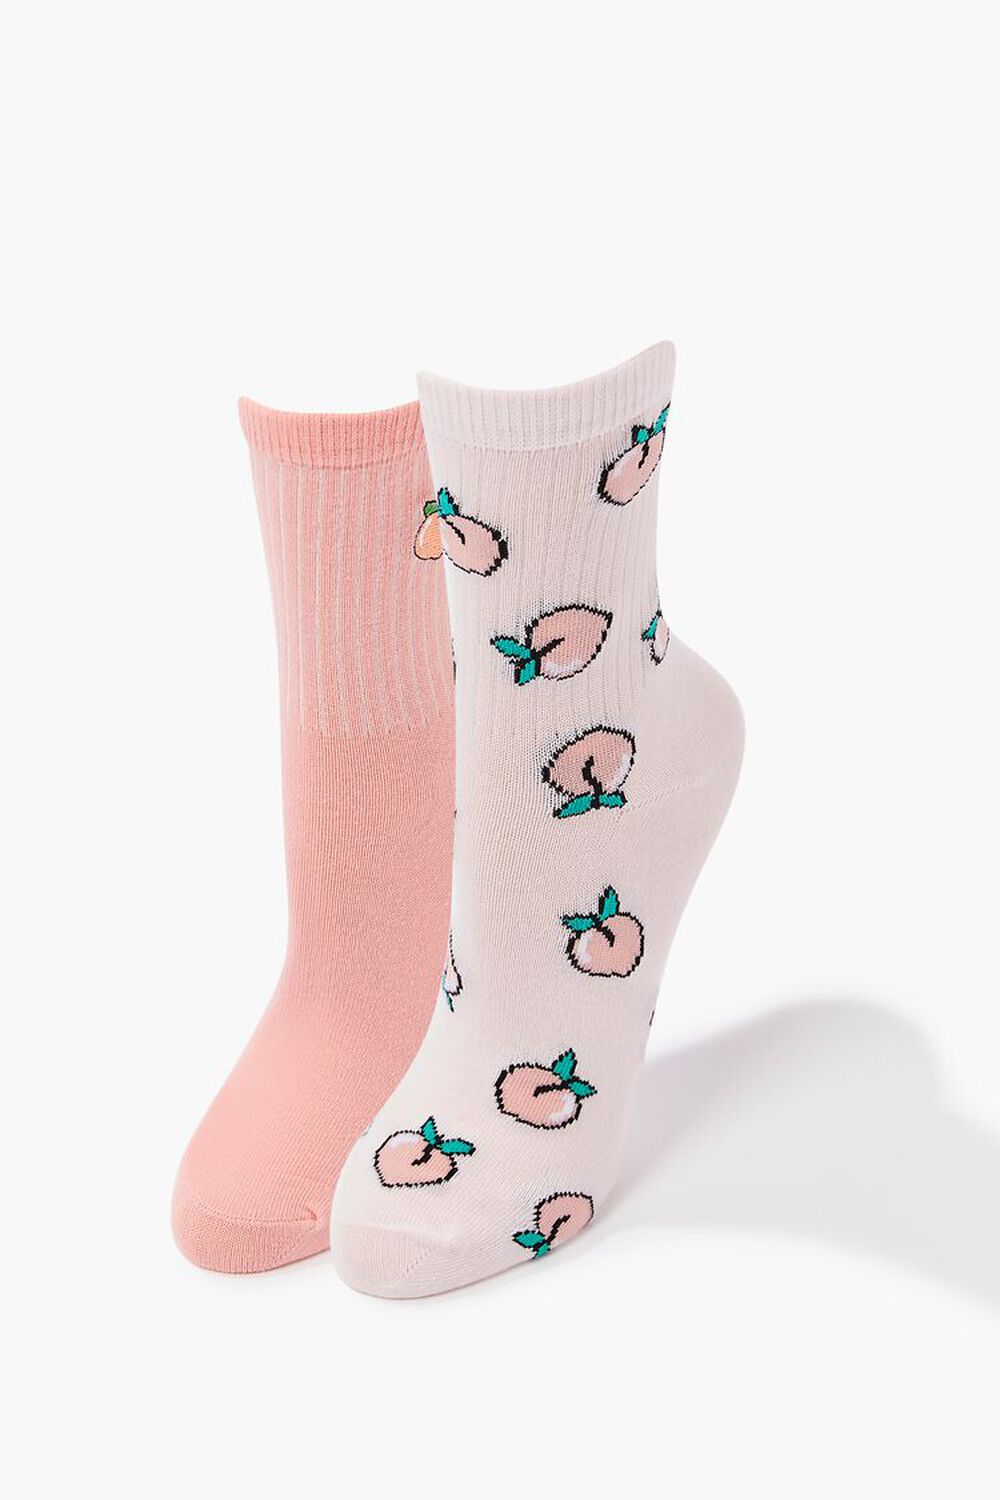 Peach Print Crew Sock Set - 2 pack, image 1